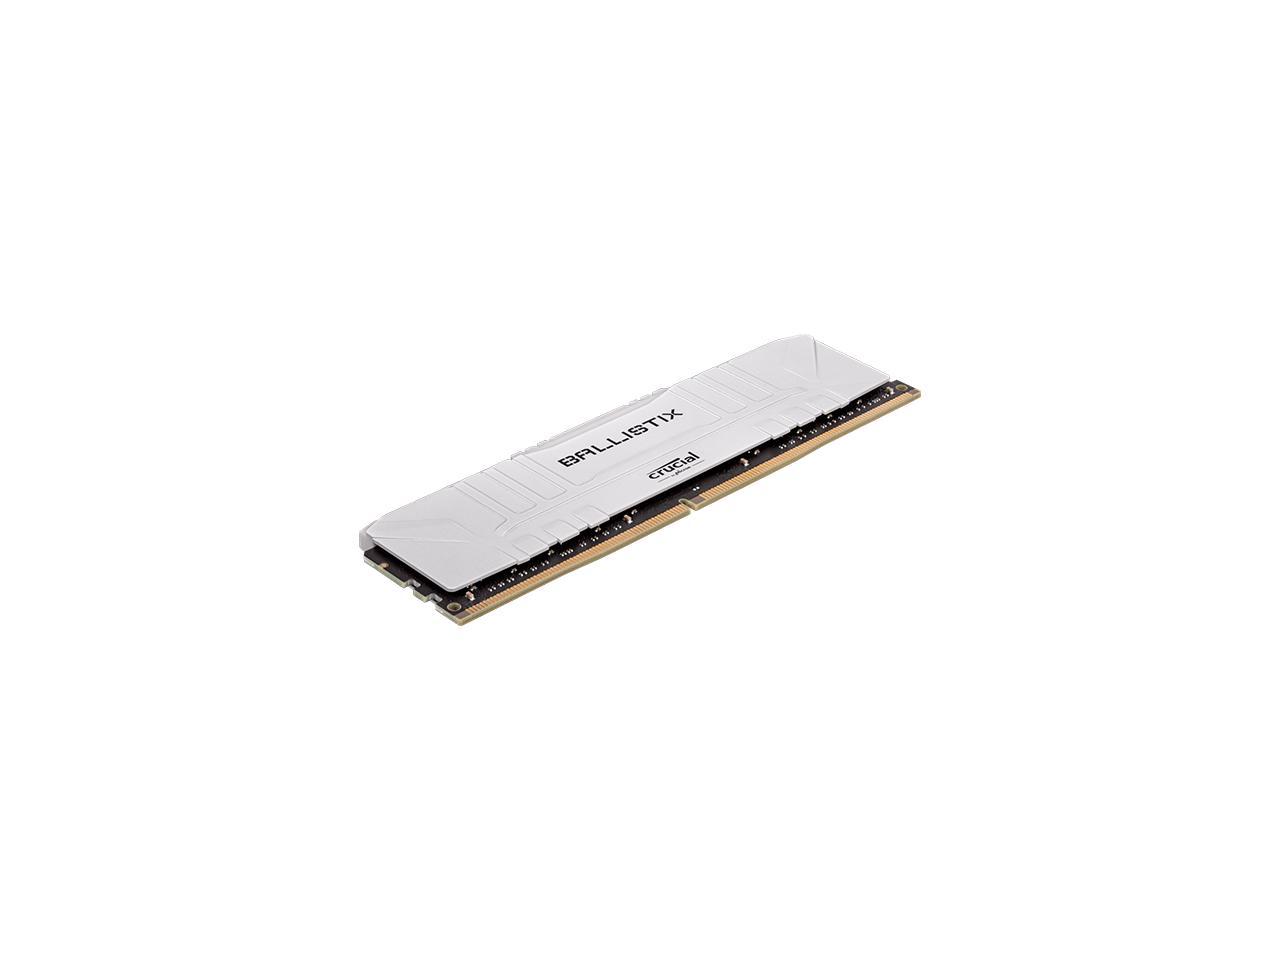 Crucial Ballistix 3600 MHz DDR4 DRAM Desktop Gaming Memory Kit 32GB